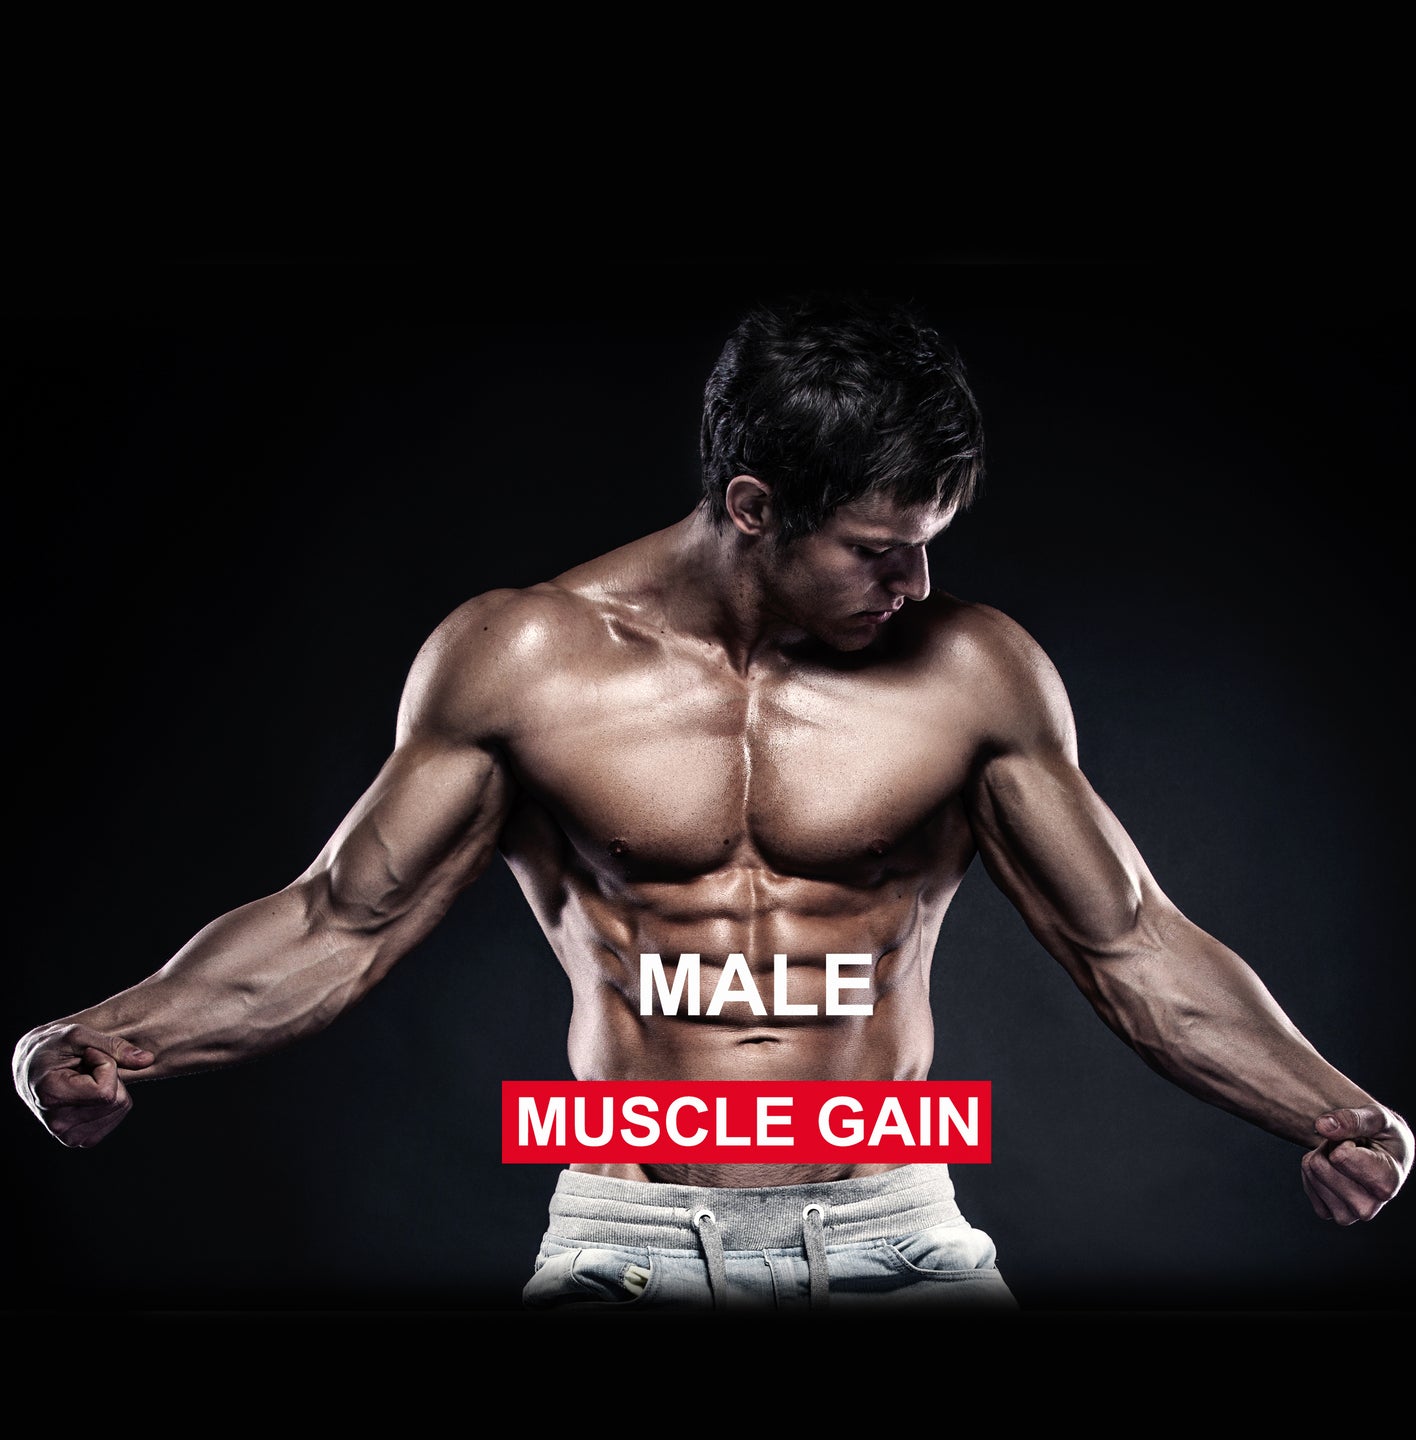 NUTRITION 1.0 - MALE muscle gain